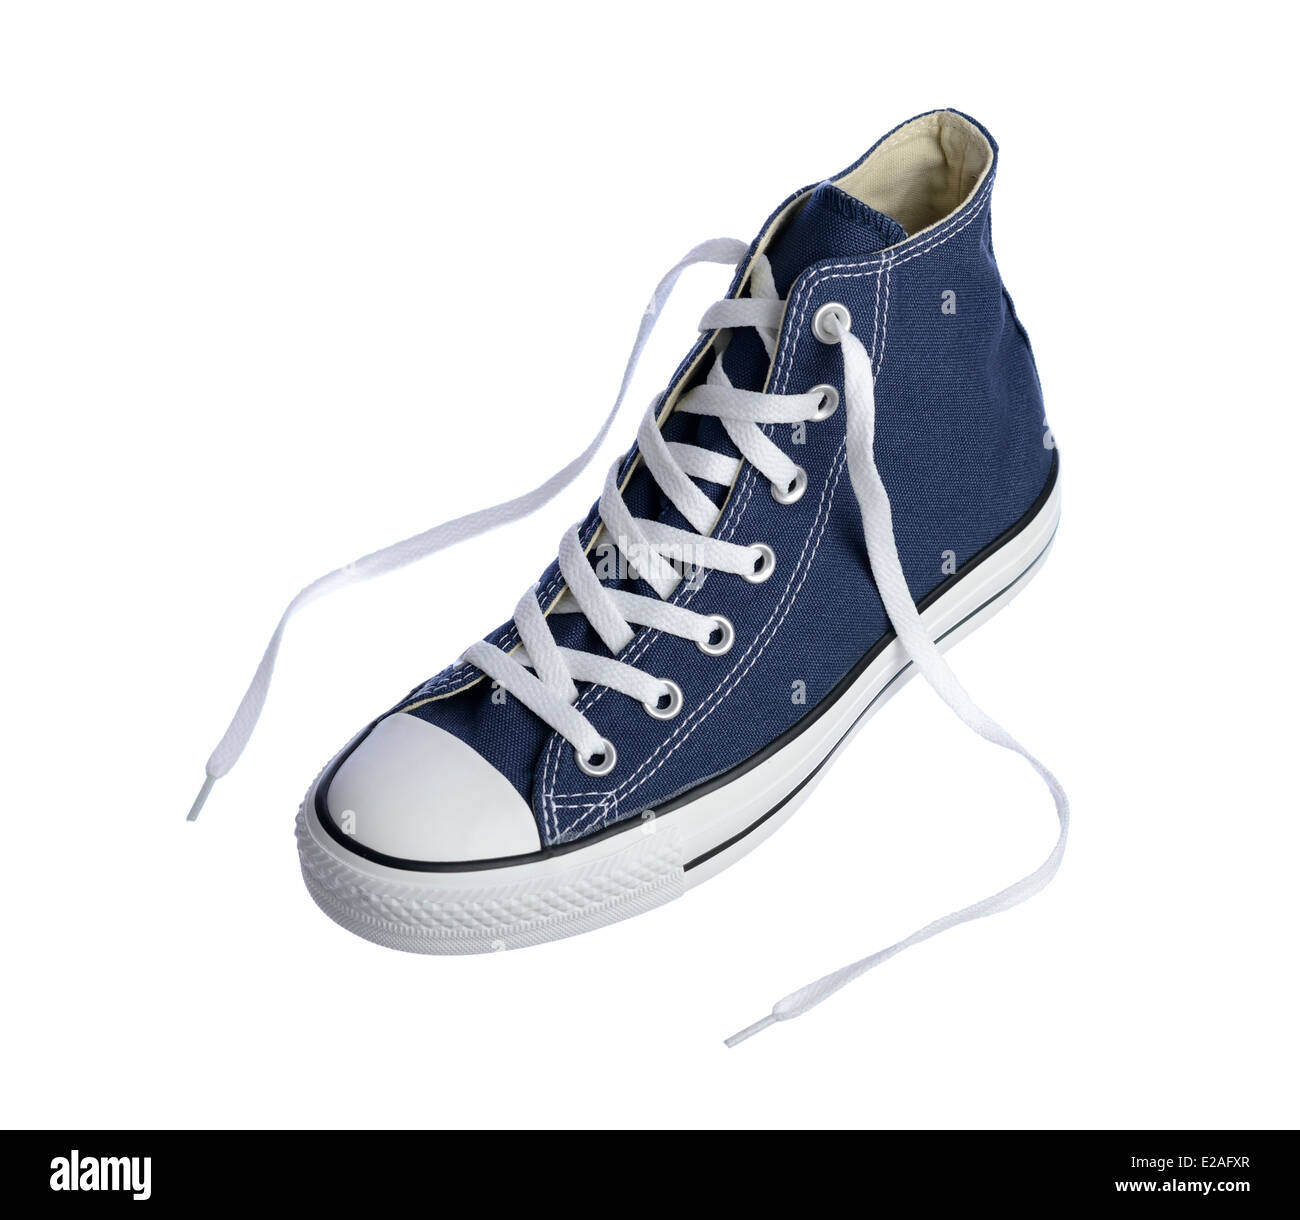 Blue Converse Chuck Taylor All Star shoe Stock Photo - Alamy